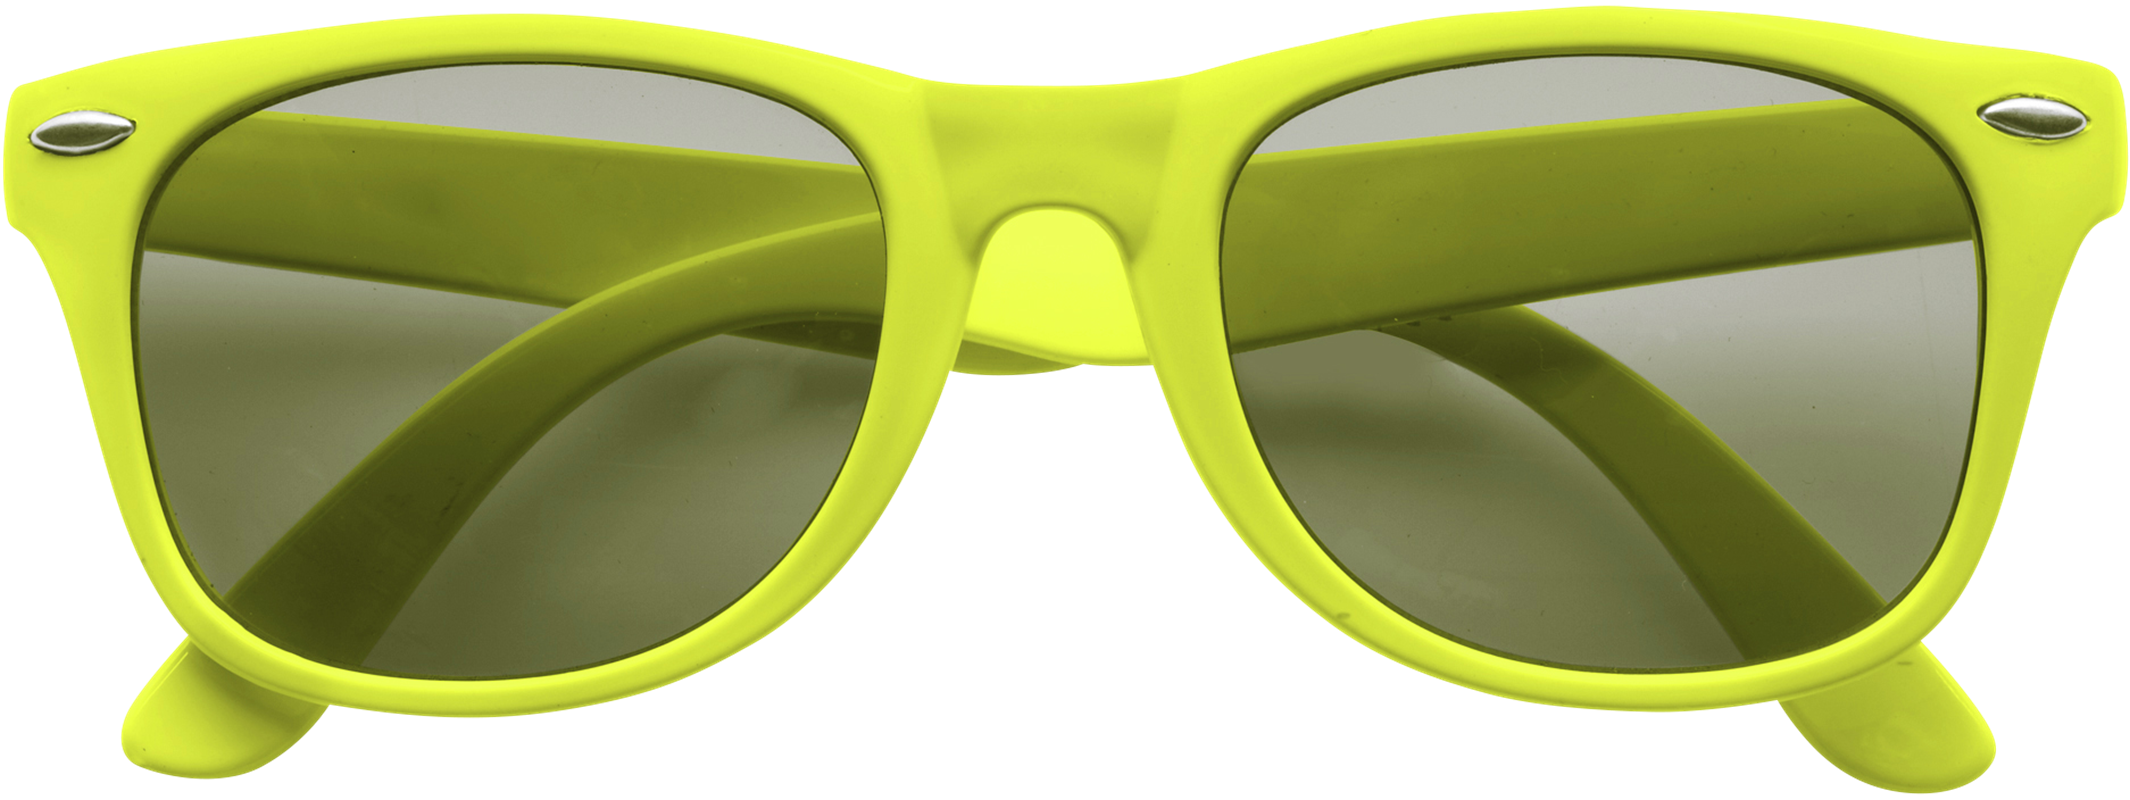 Classic sunglasses 9672_019 (Lime)